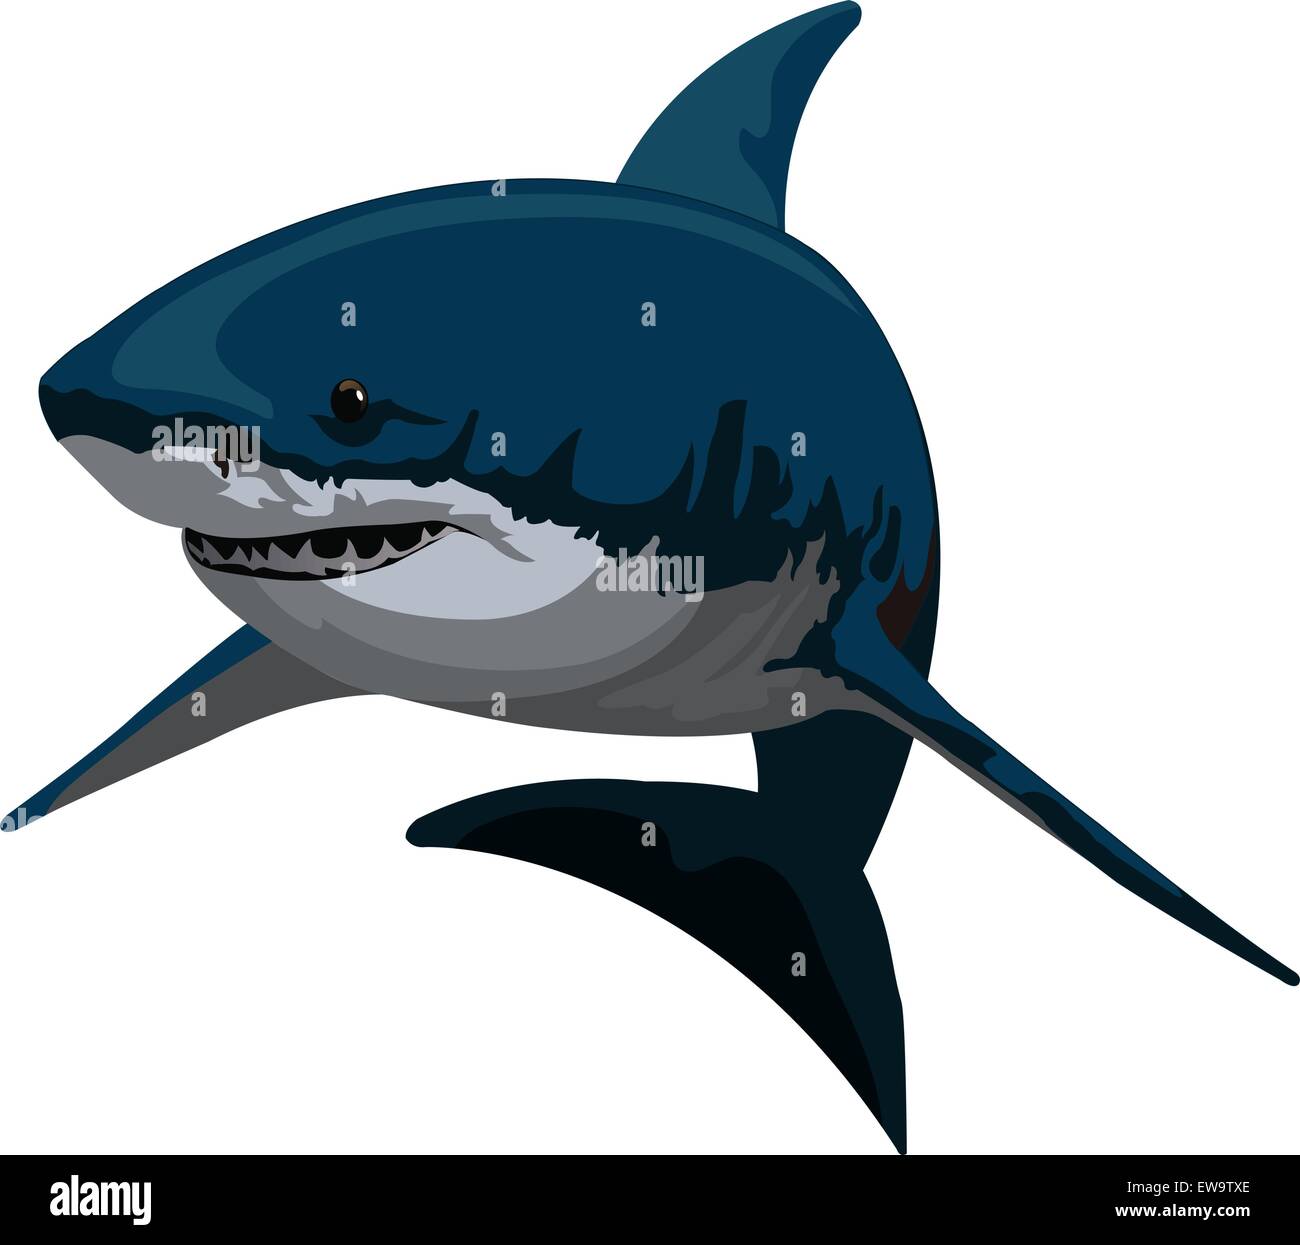 Shark, Blue and Gray, vector illustration Stock Vector